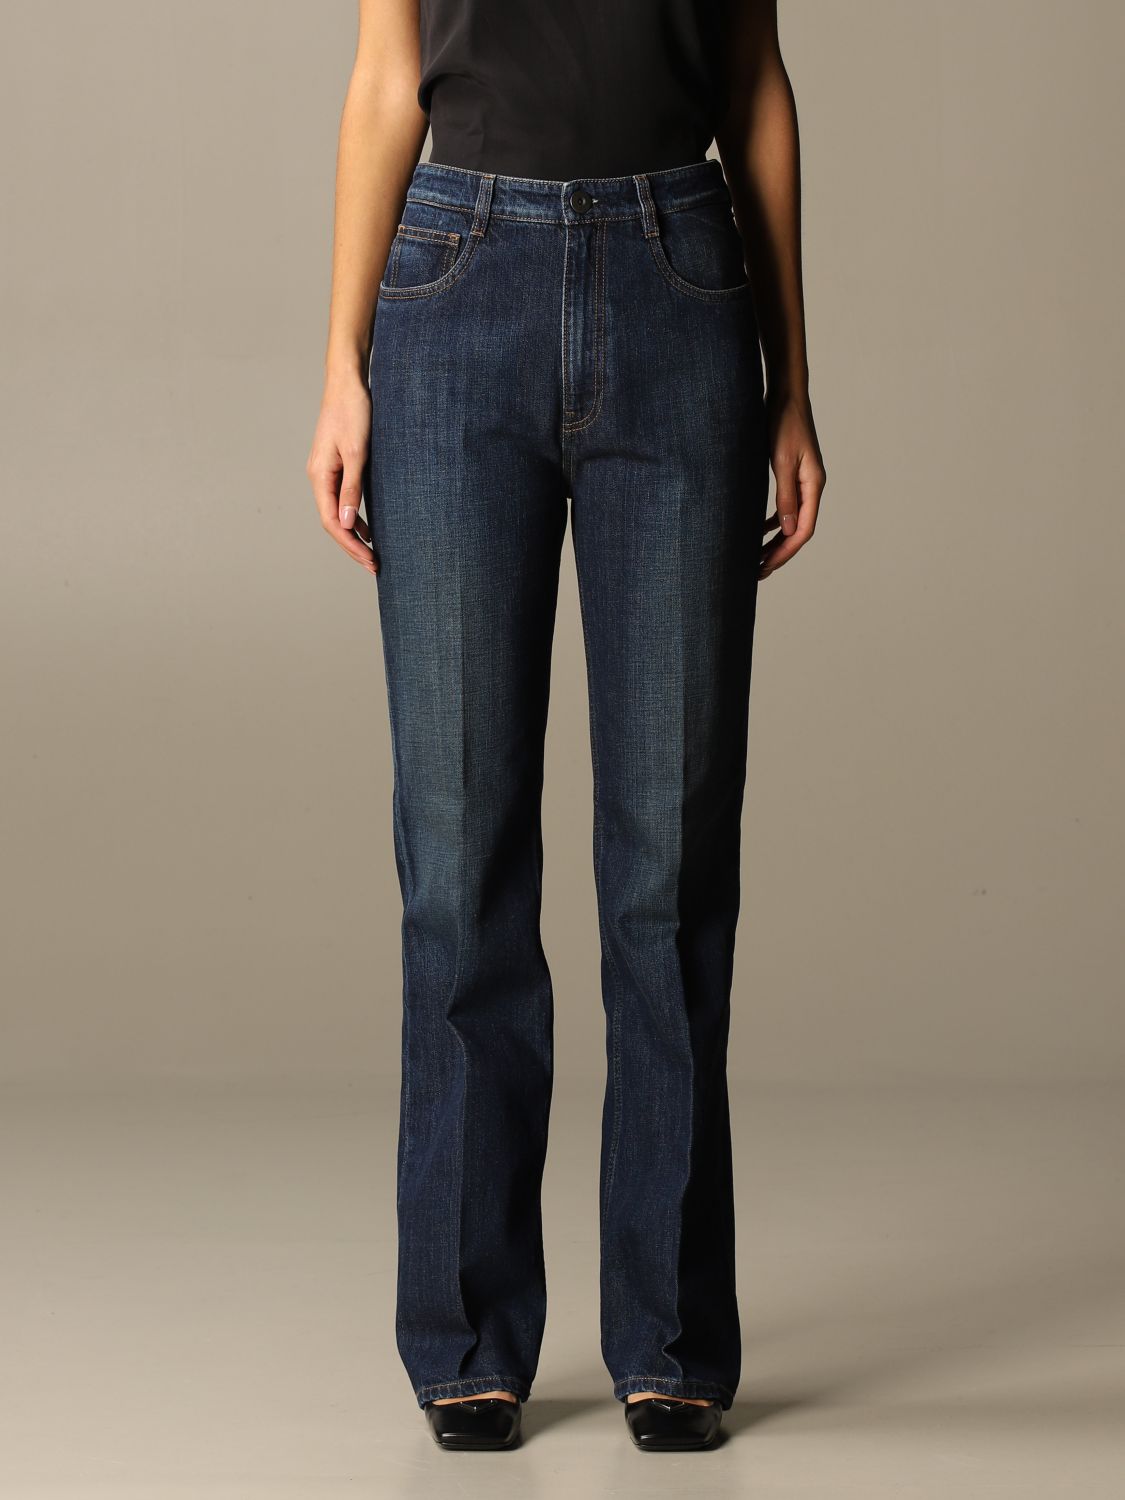 PRADA: jeans in used denim with triangular logo - Blue | Prada jeans GFP461  1XNB online on 